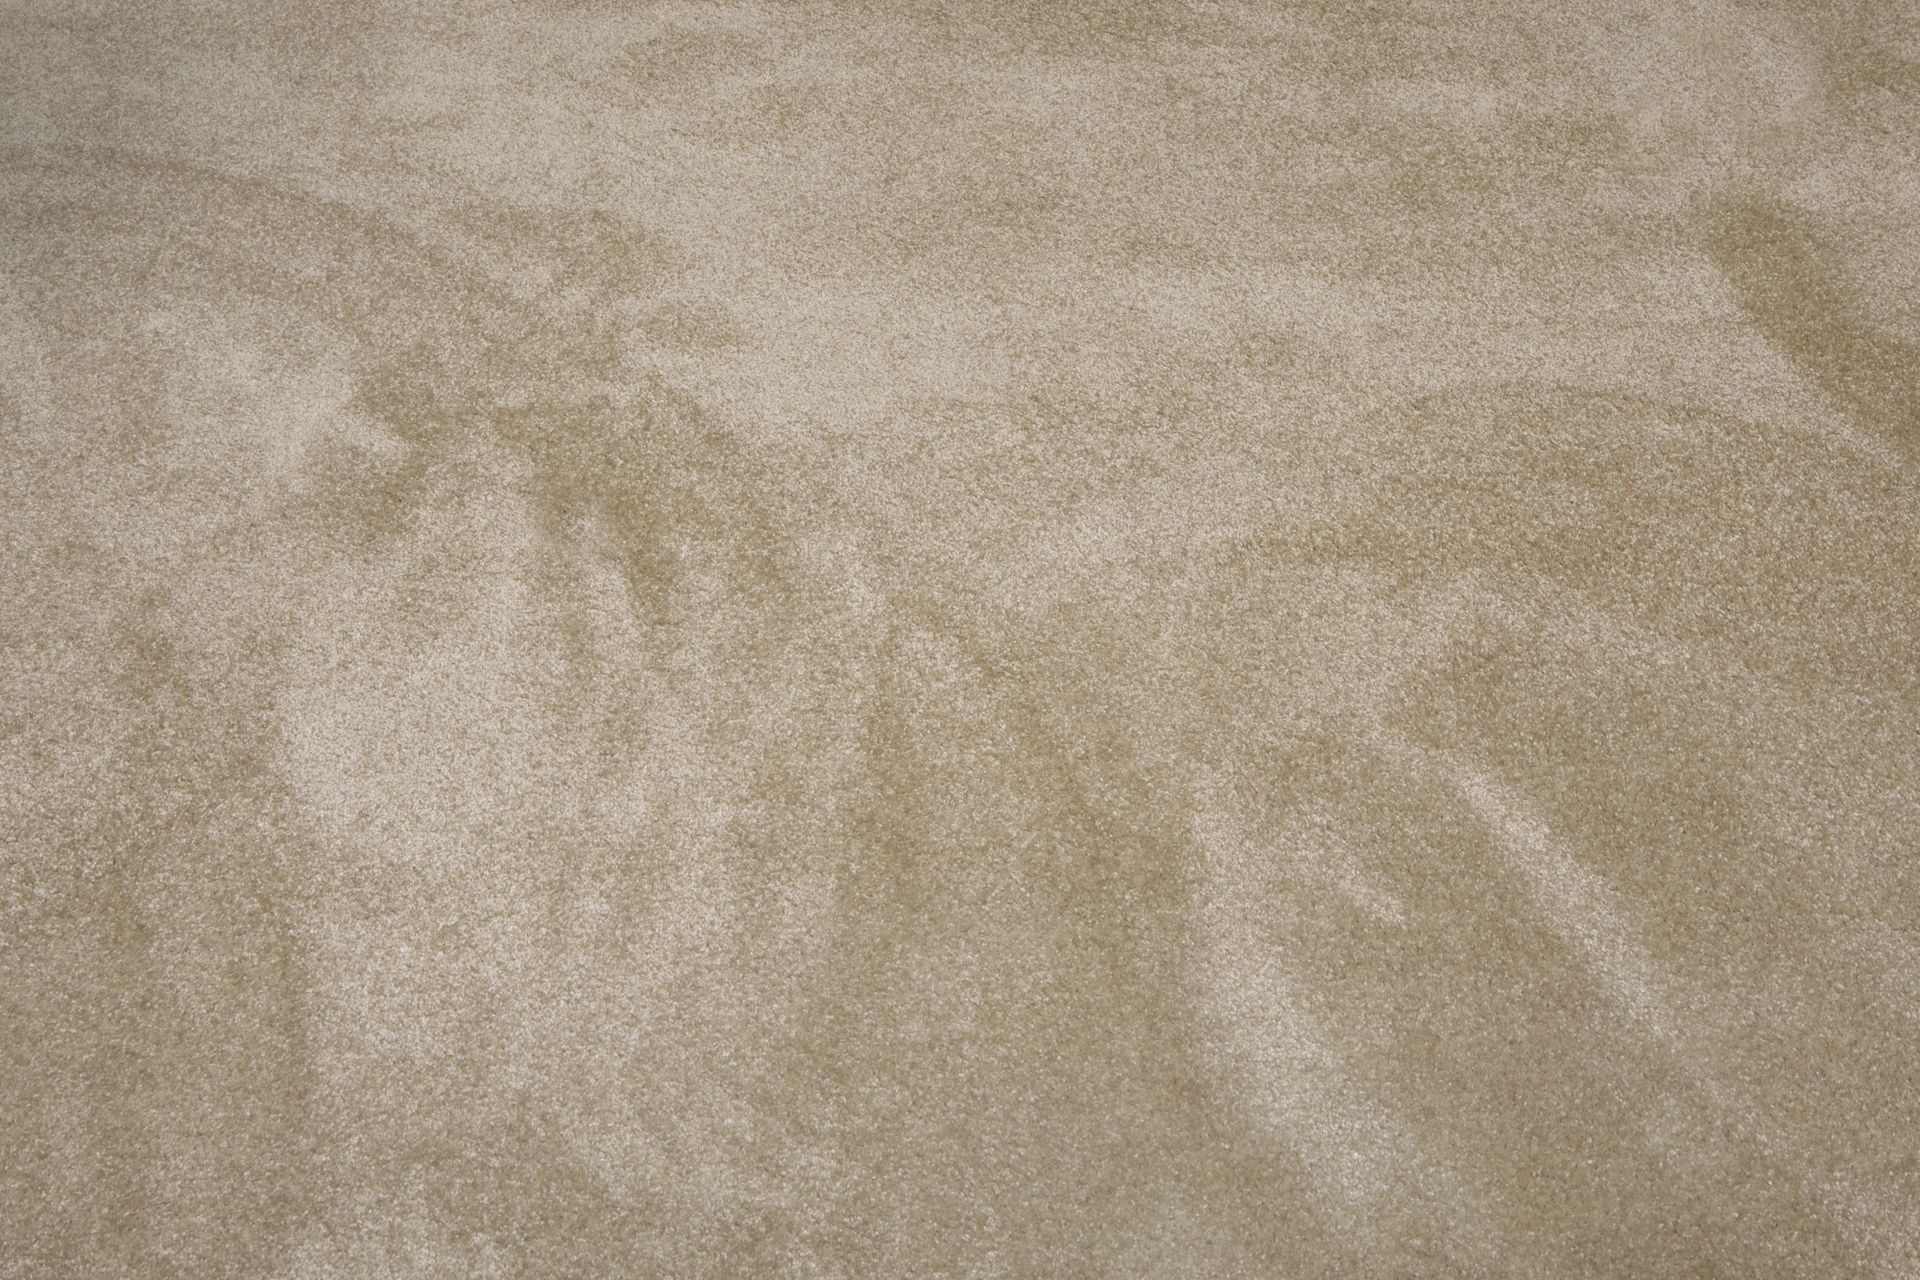 Seestoff sand Detail